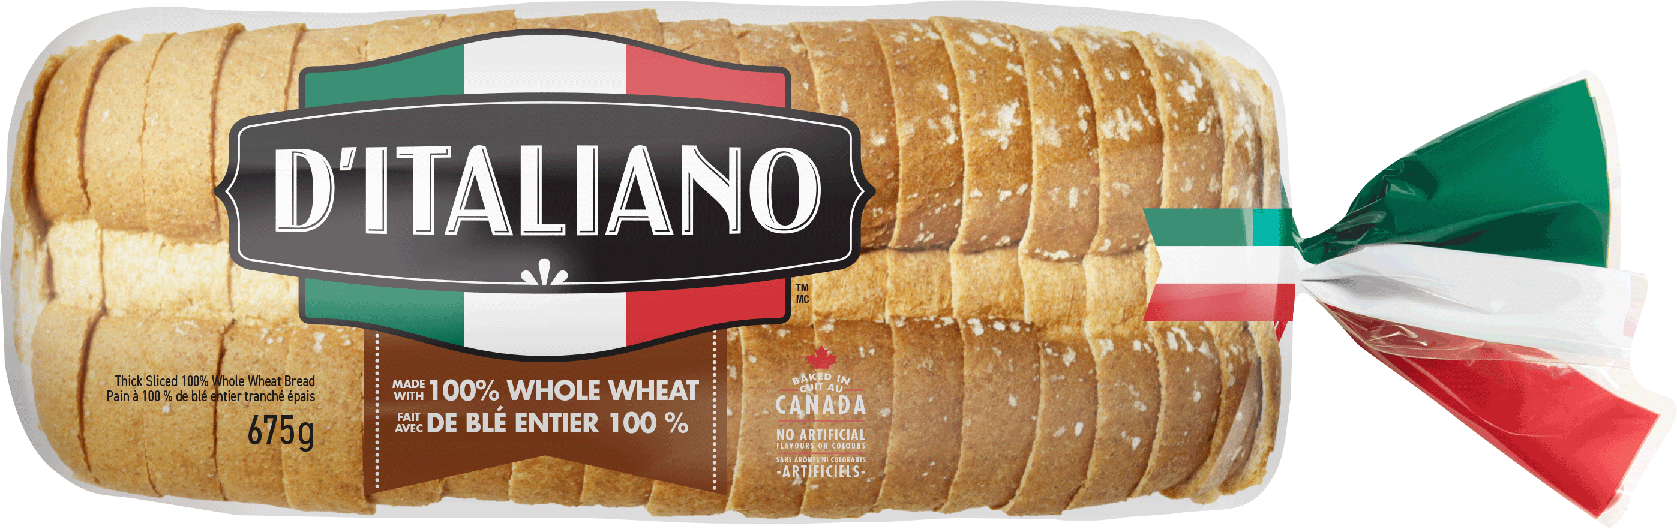 D’Italiano<sup>®</sup> Thick Slice 100% Whole Wheat Bread